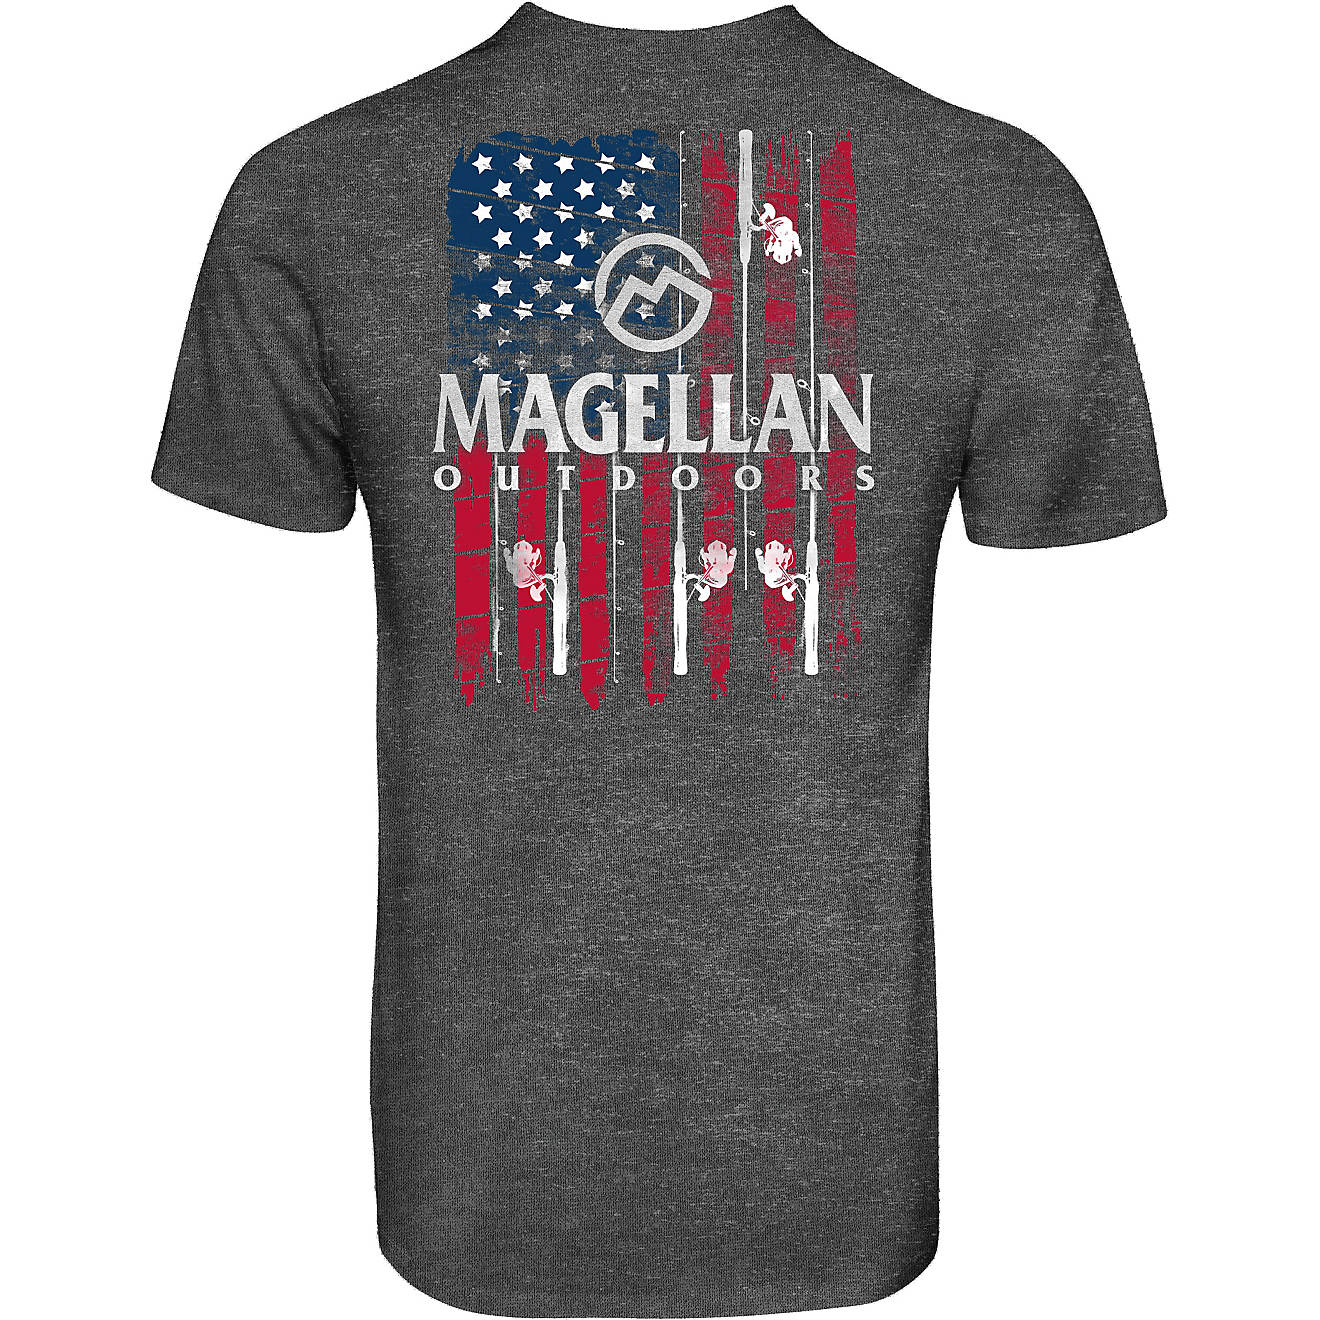 Magellan Outdoors Men's CHIPPED FLAG Short Sleeve T-shirt                                                                        - view number 1